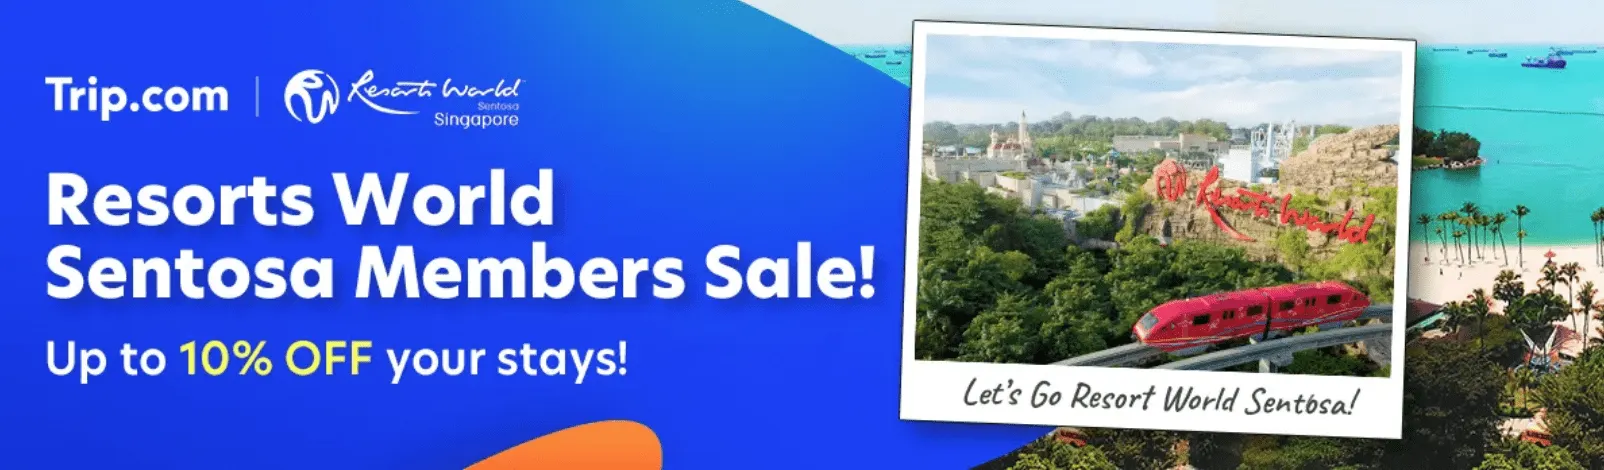 Trip.com Promo Code Singapore: Resorts World Sentosa Members Sale